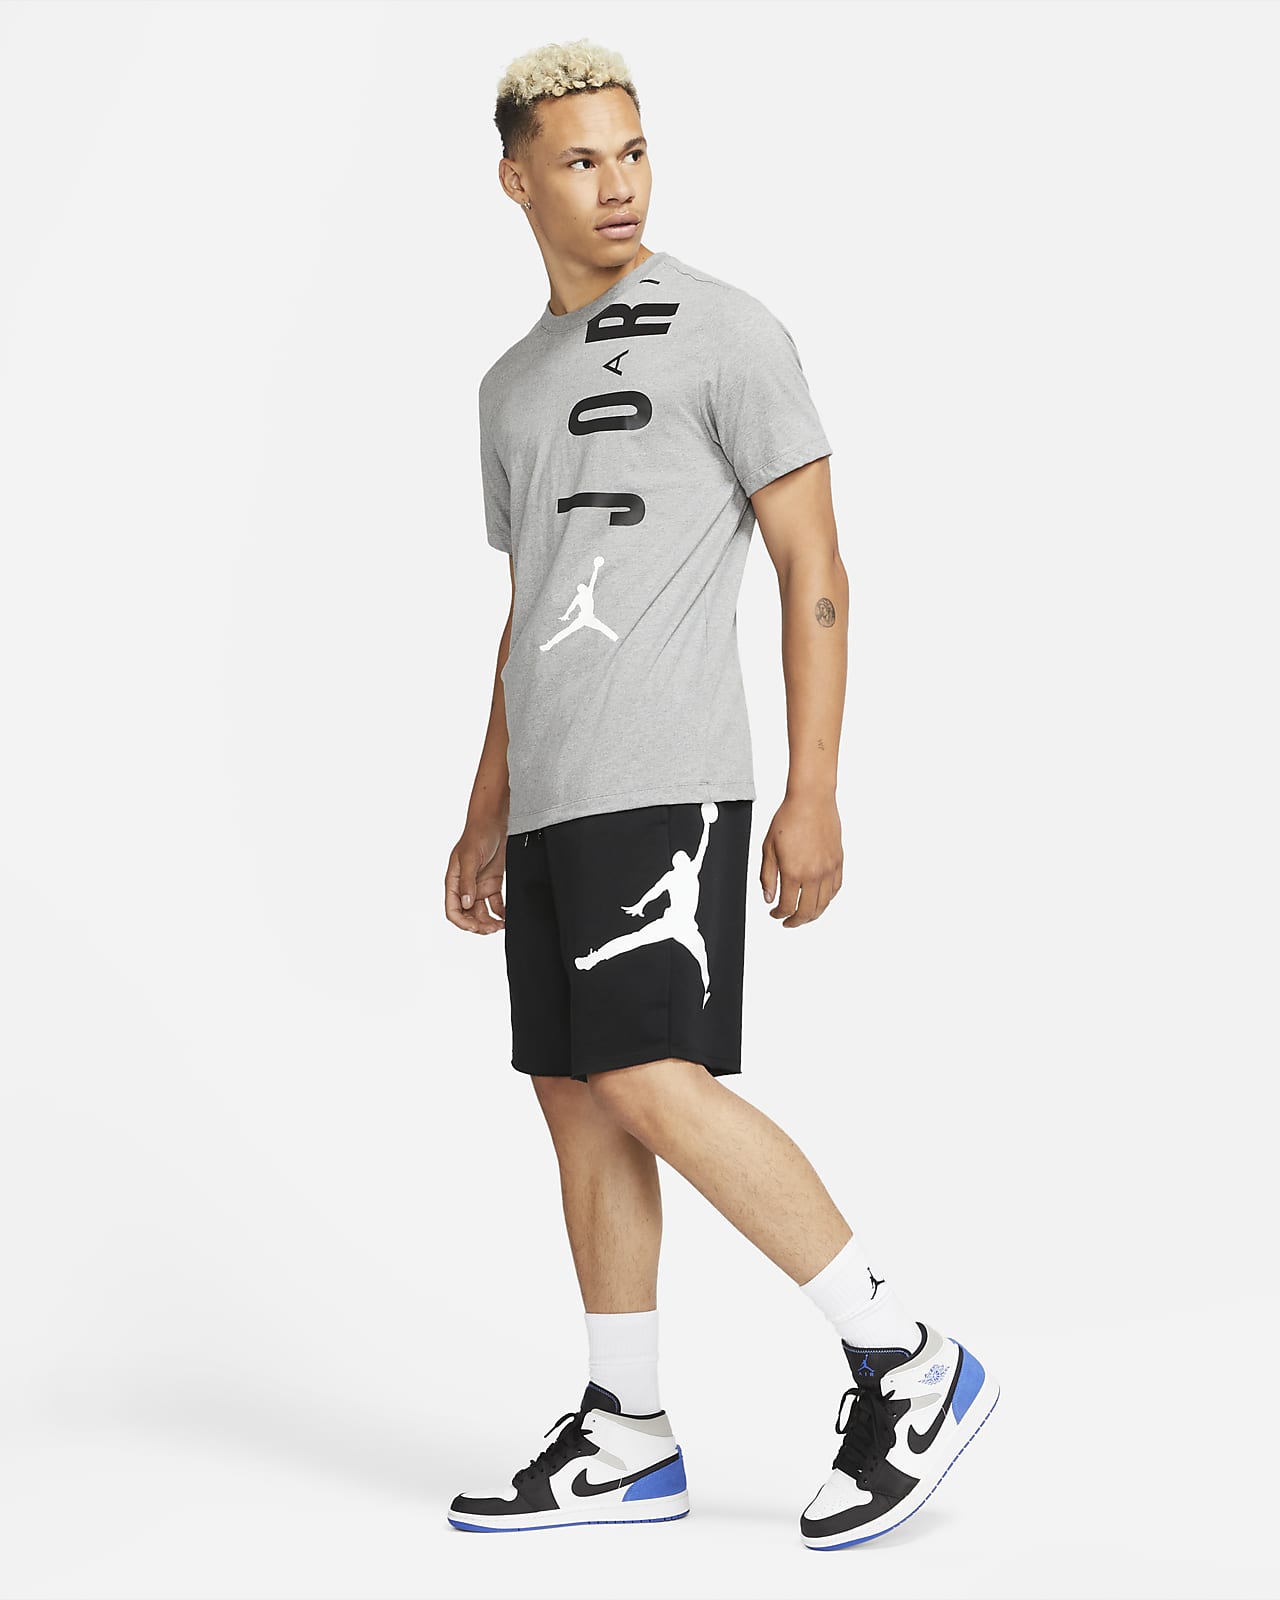 Jordan Jumpman Logo Men's Fleece Shorts. Nike.com